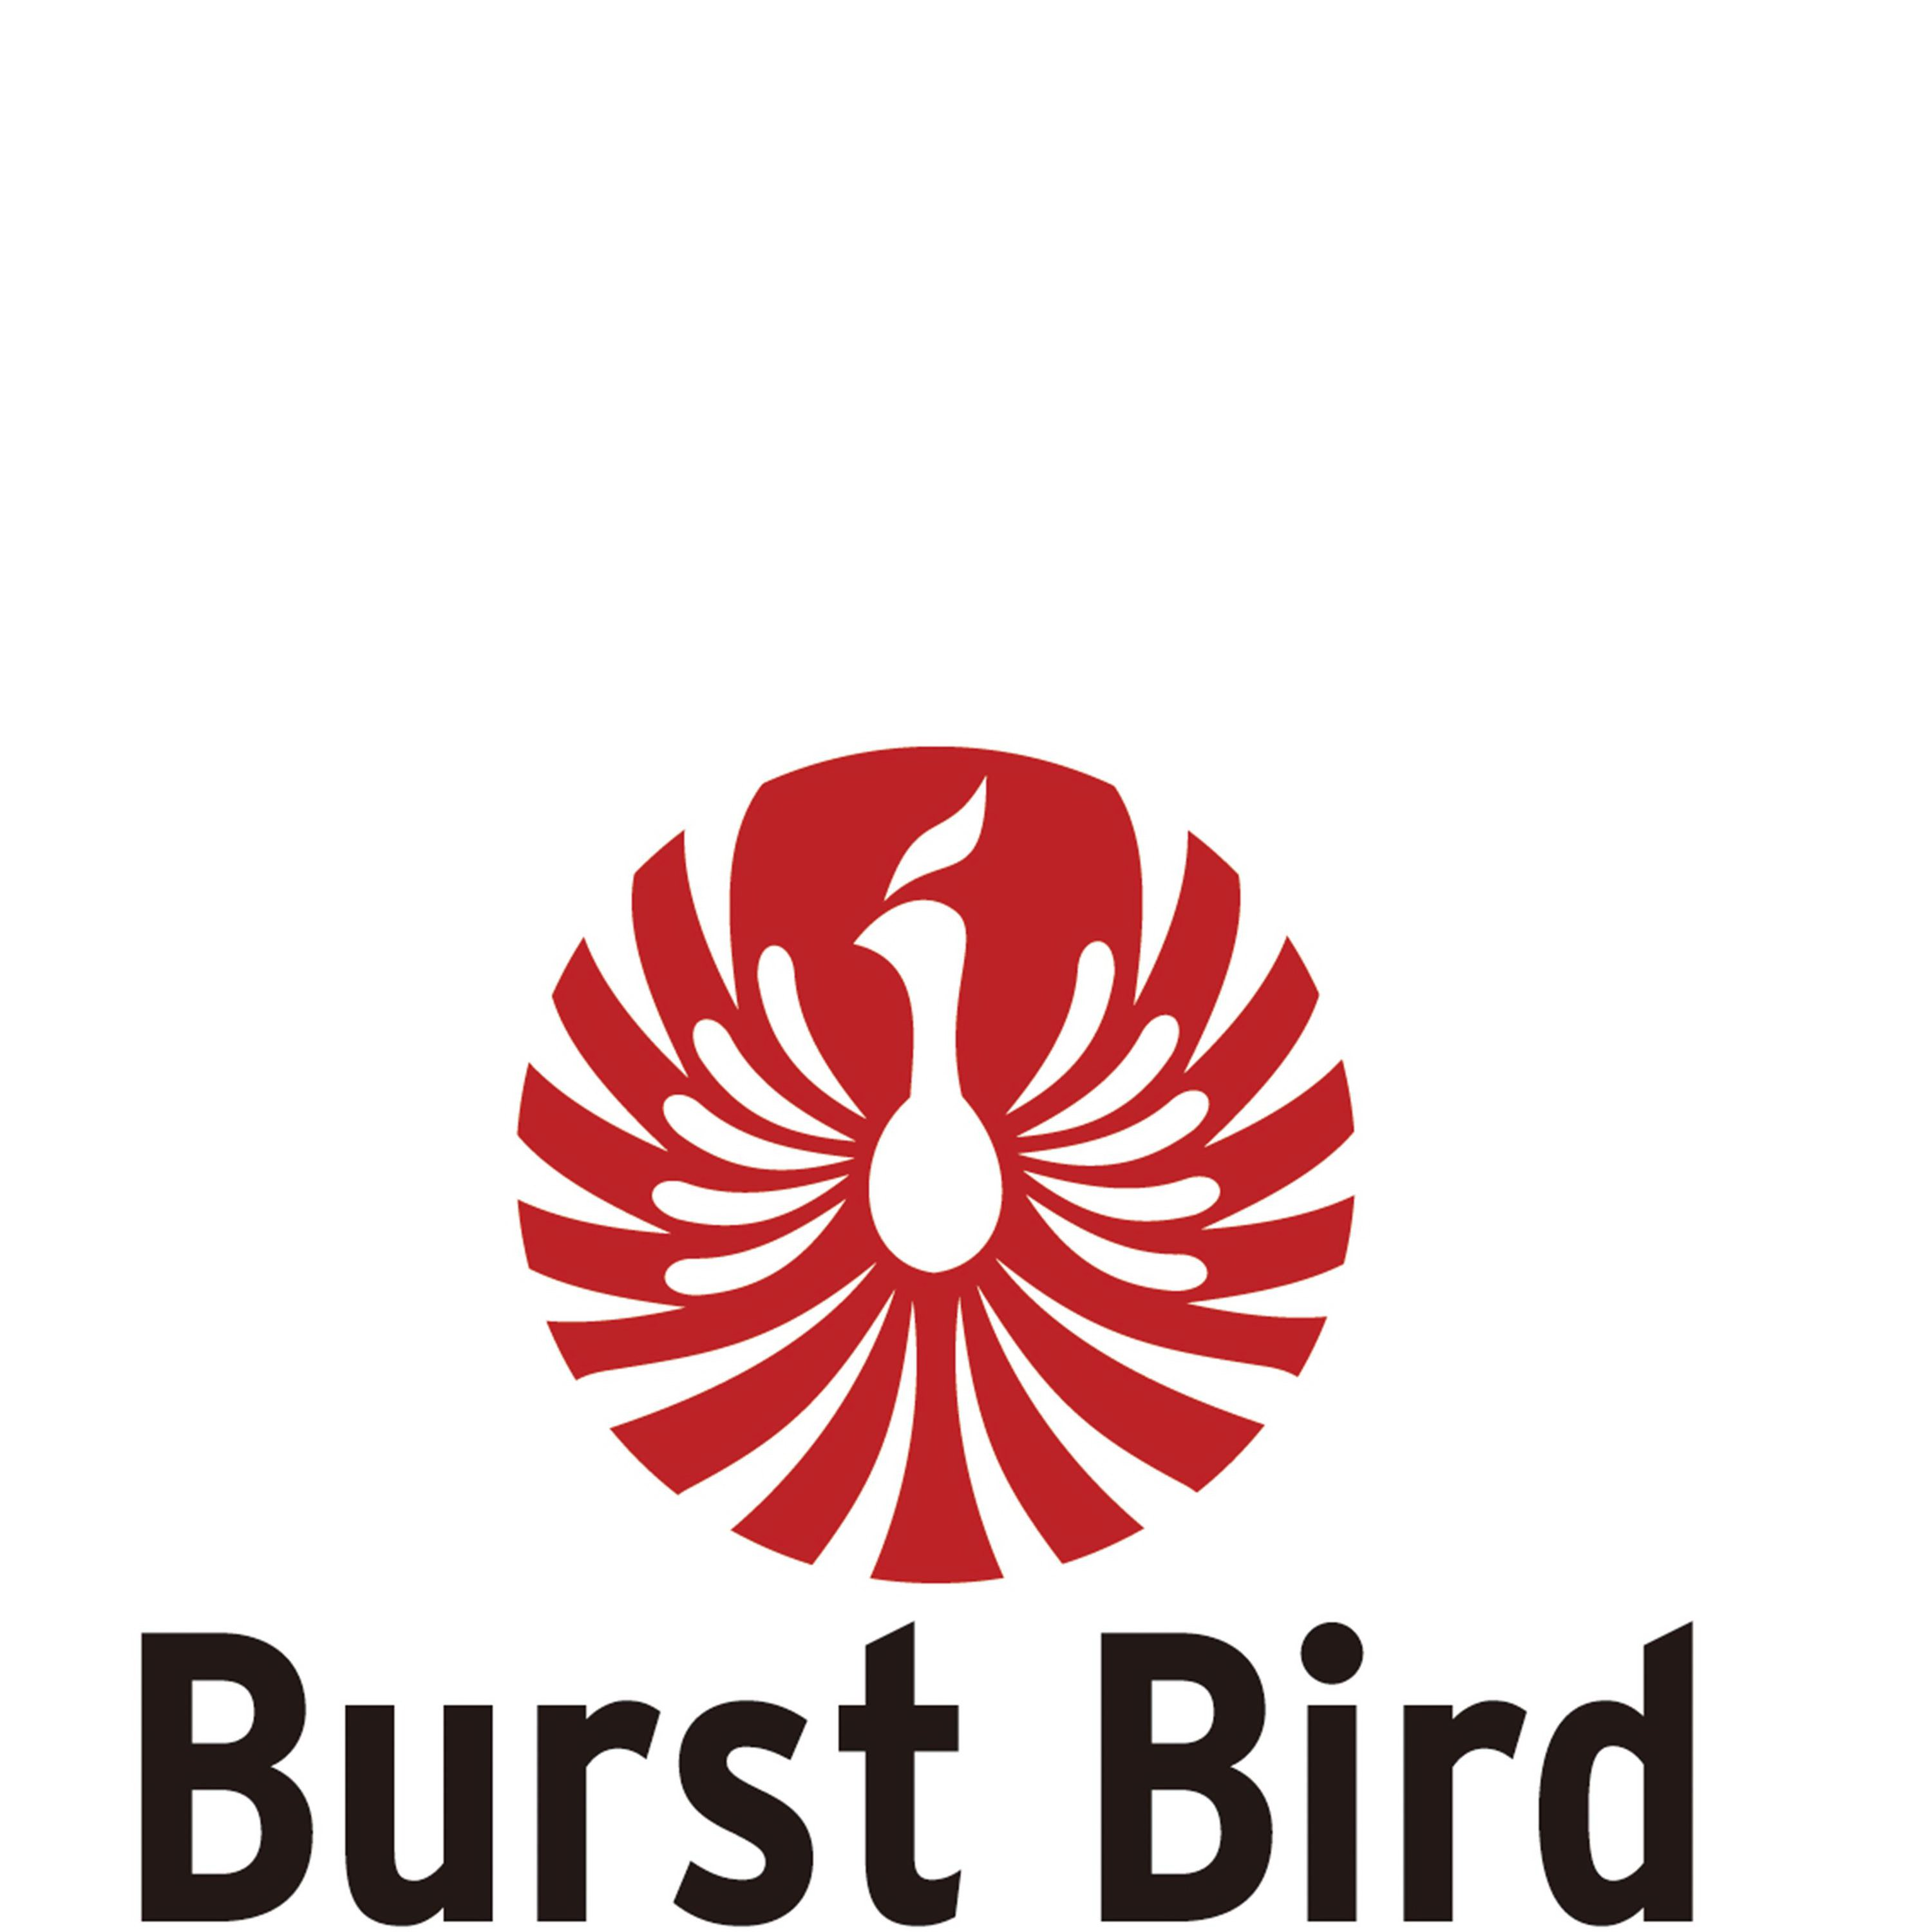  BURST BIRD